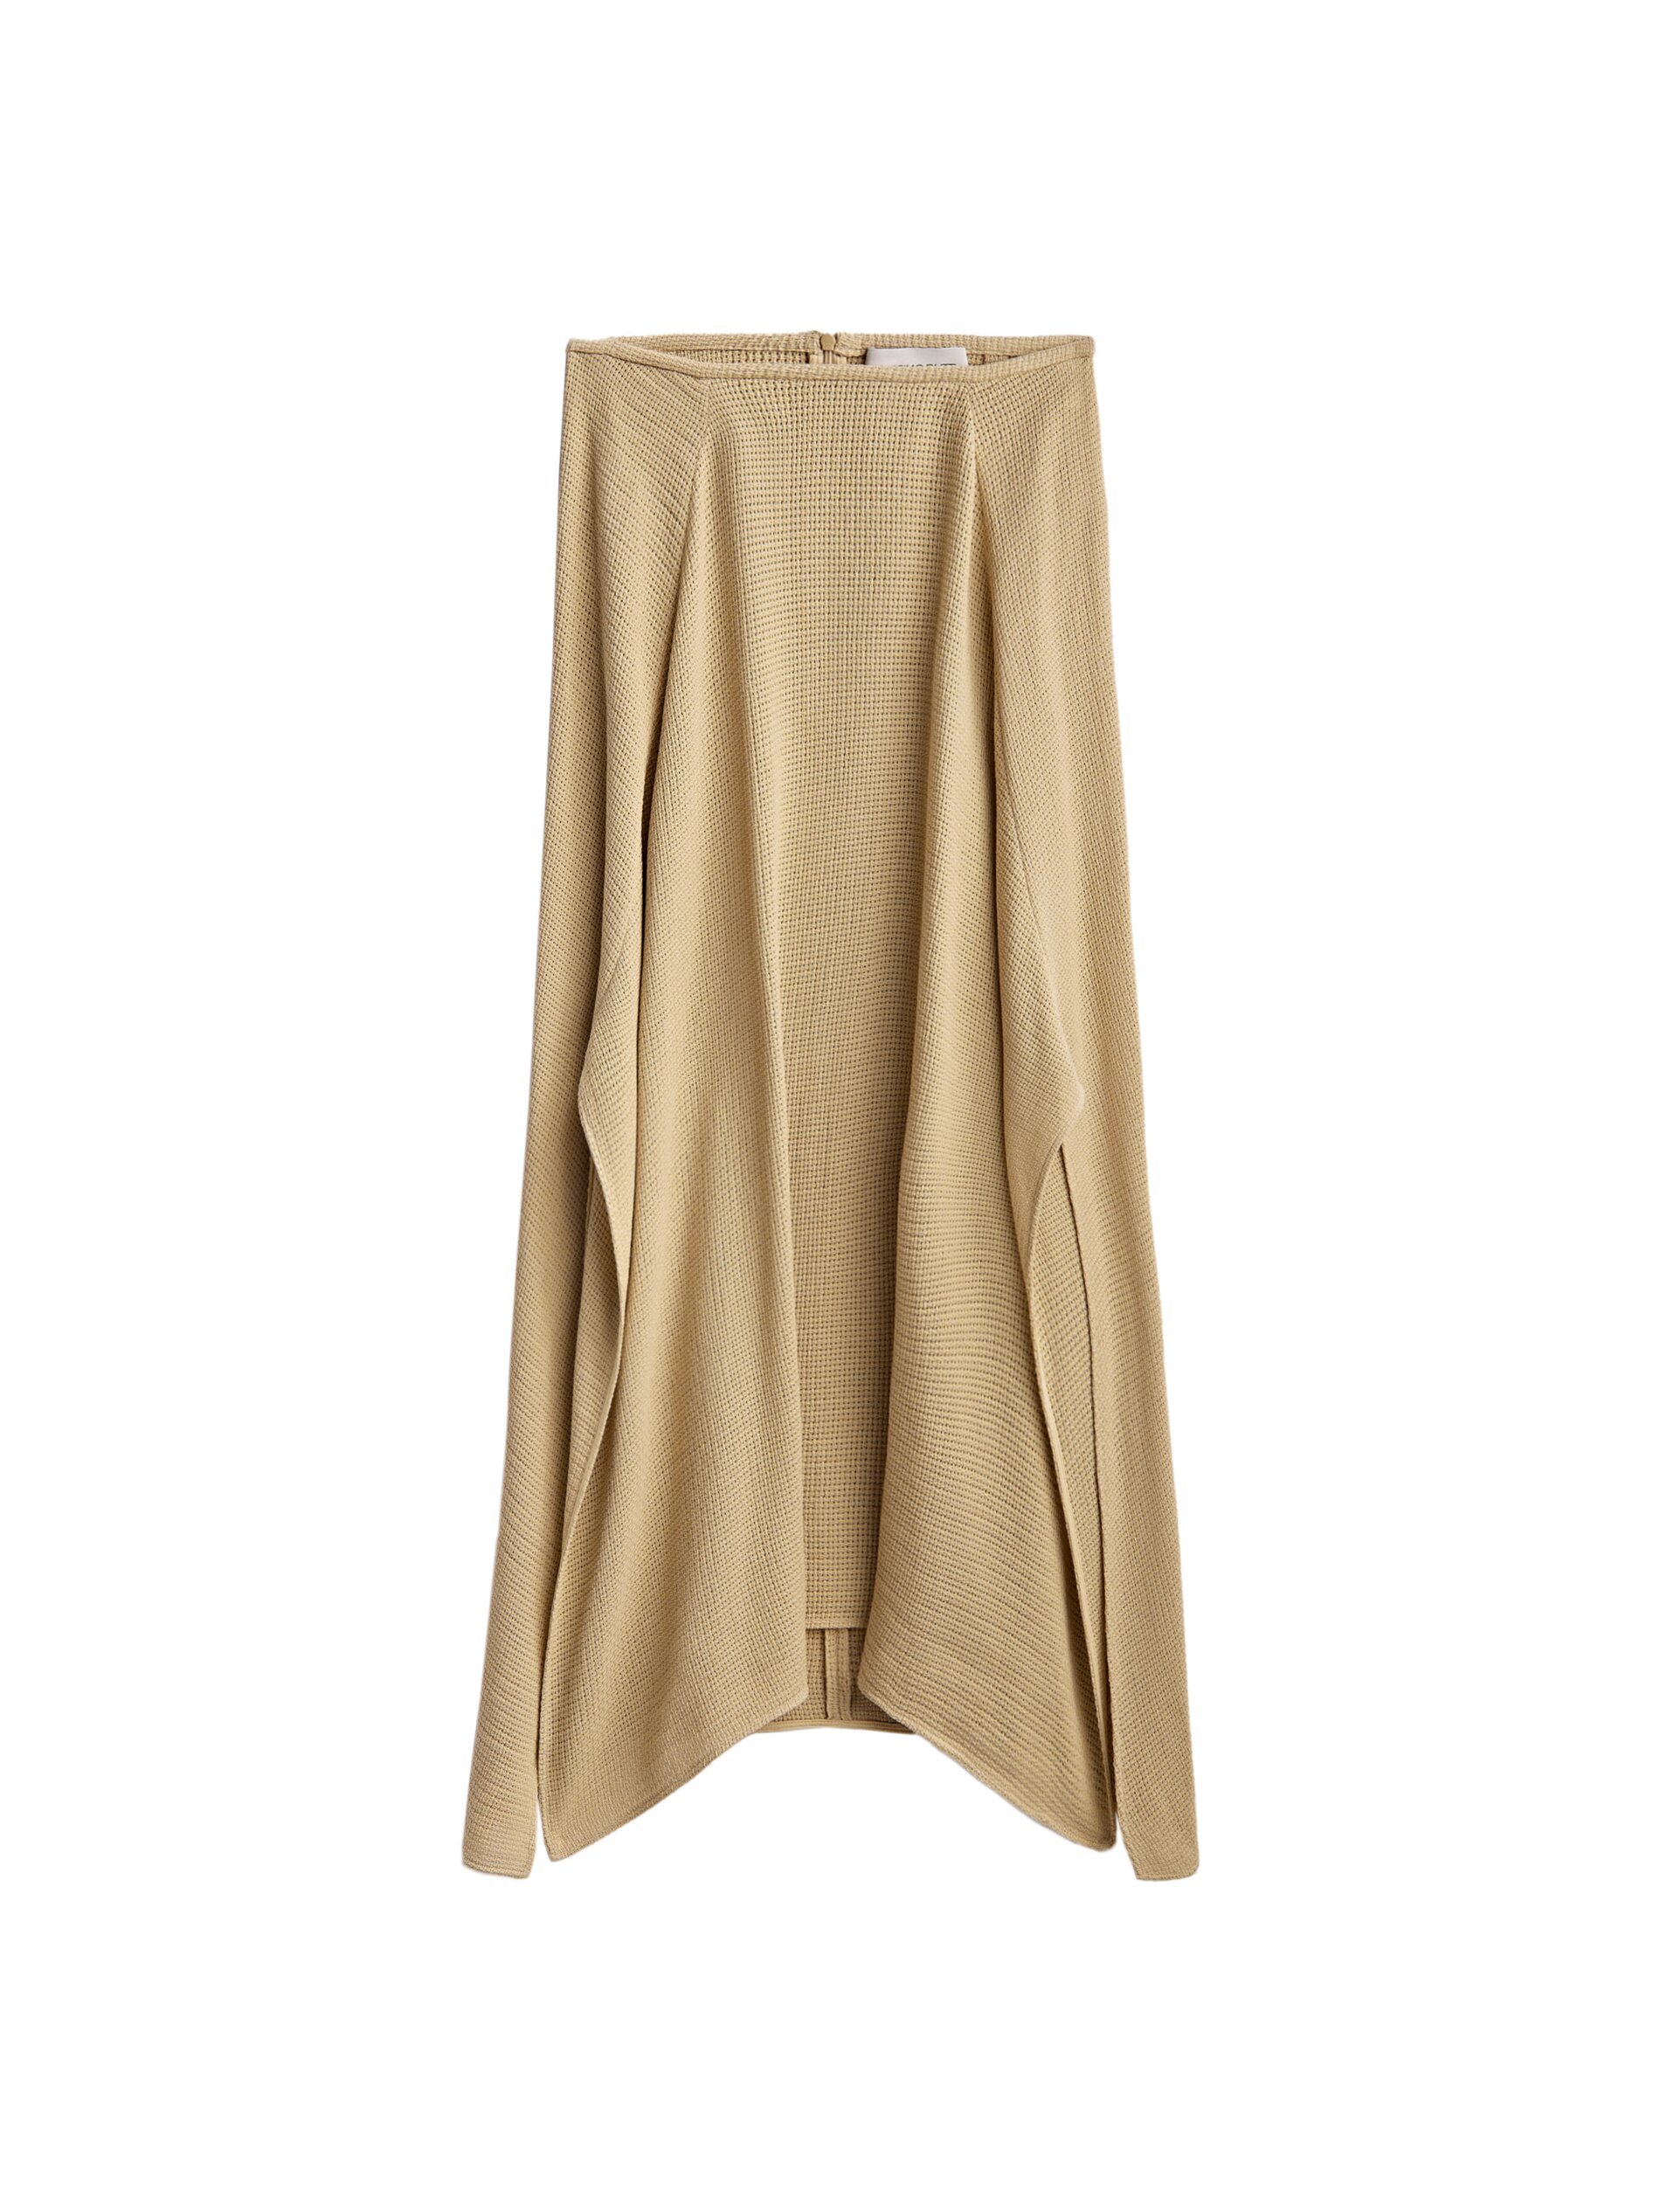 Long draped skirt - Massimo Dutti United Kingdom